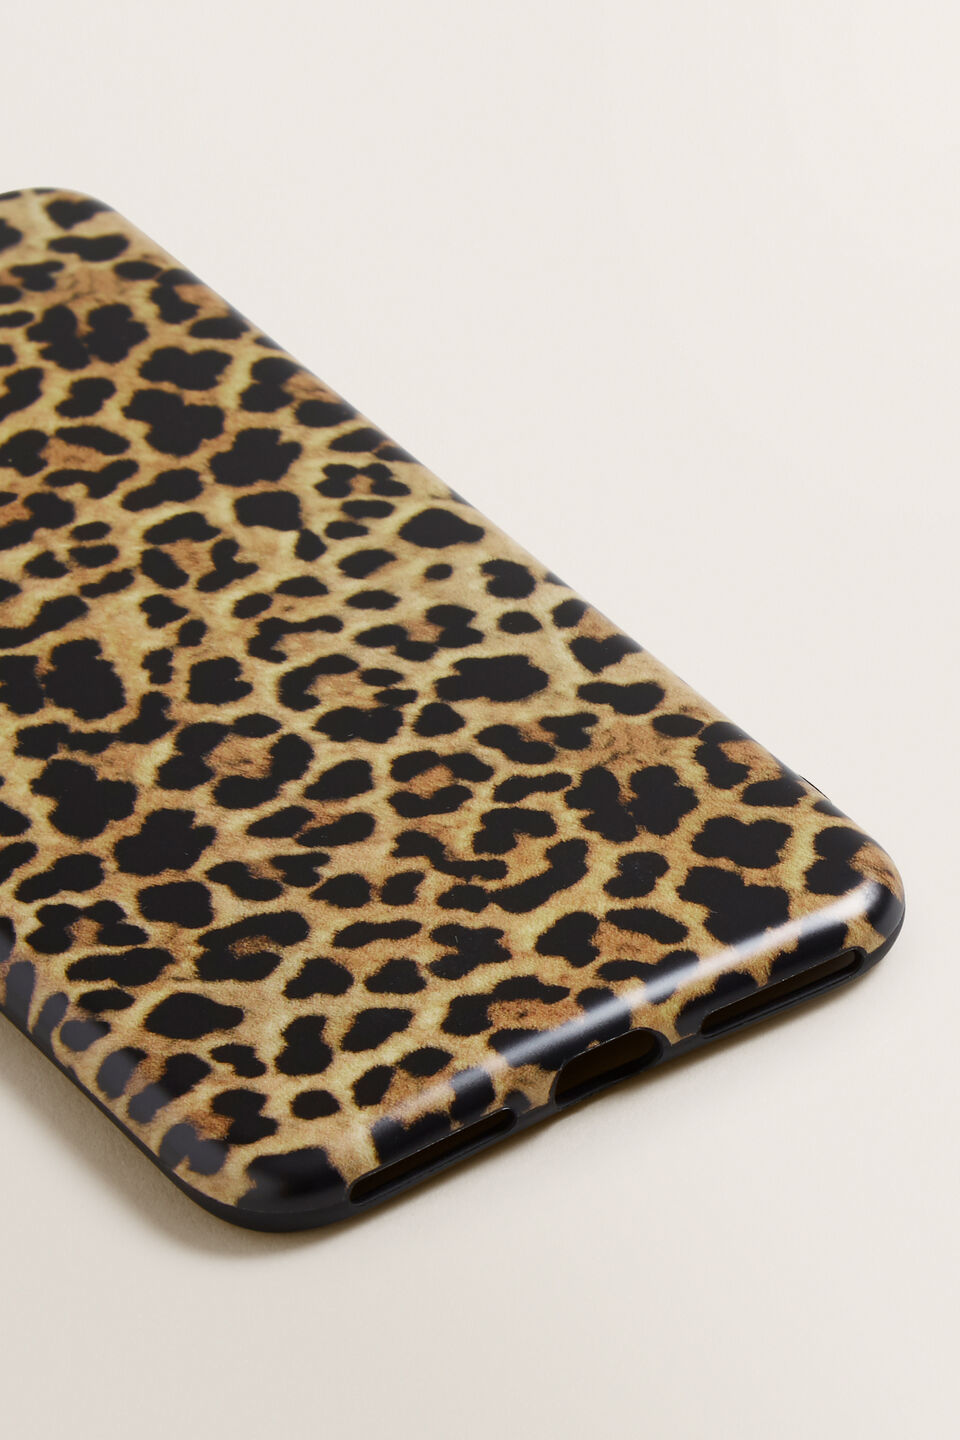 Printed Phone Case 7/8 Plus  Leopard